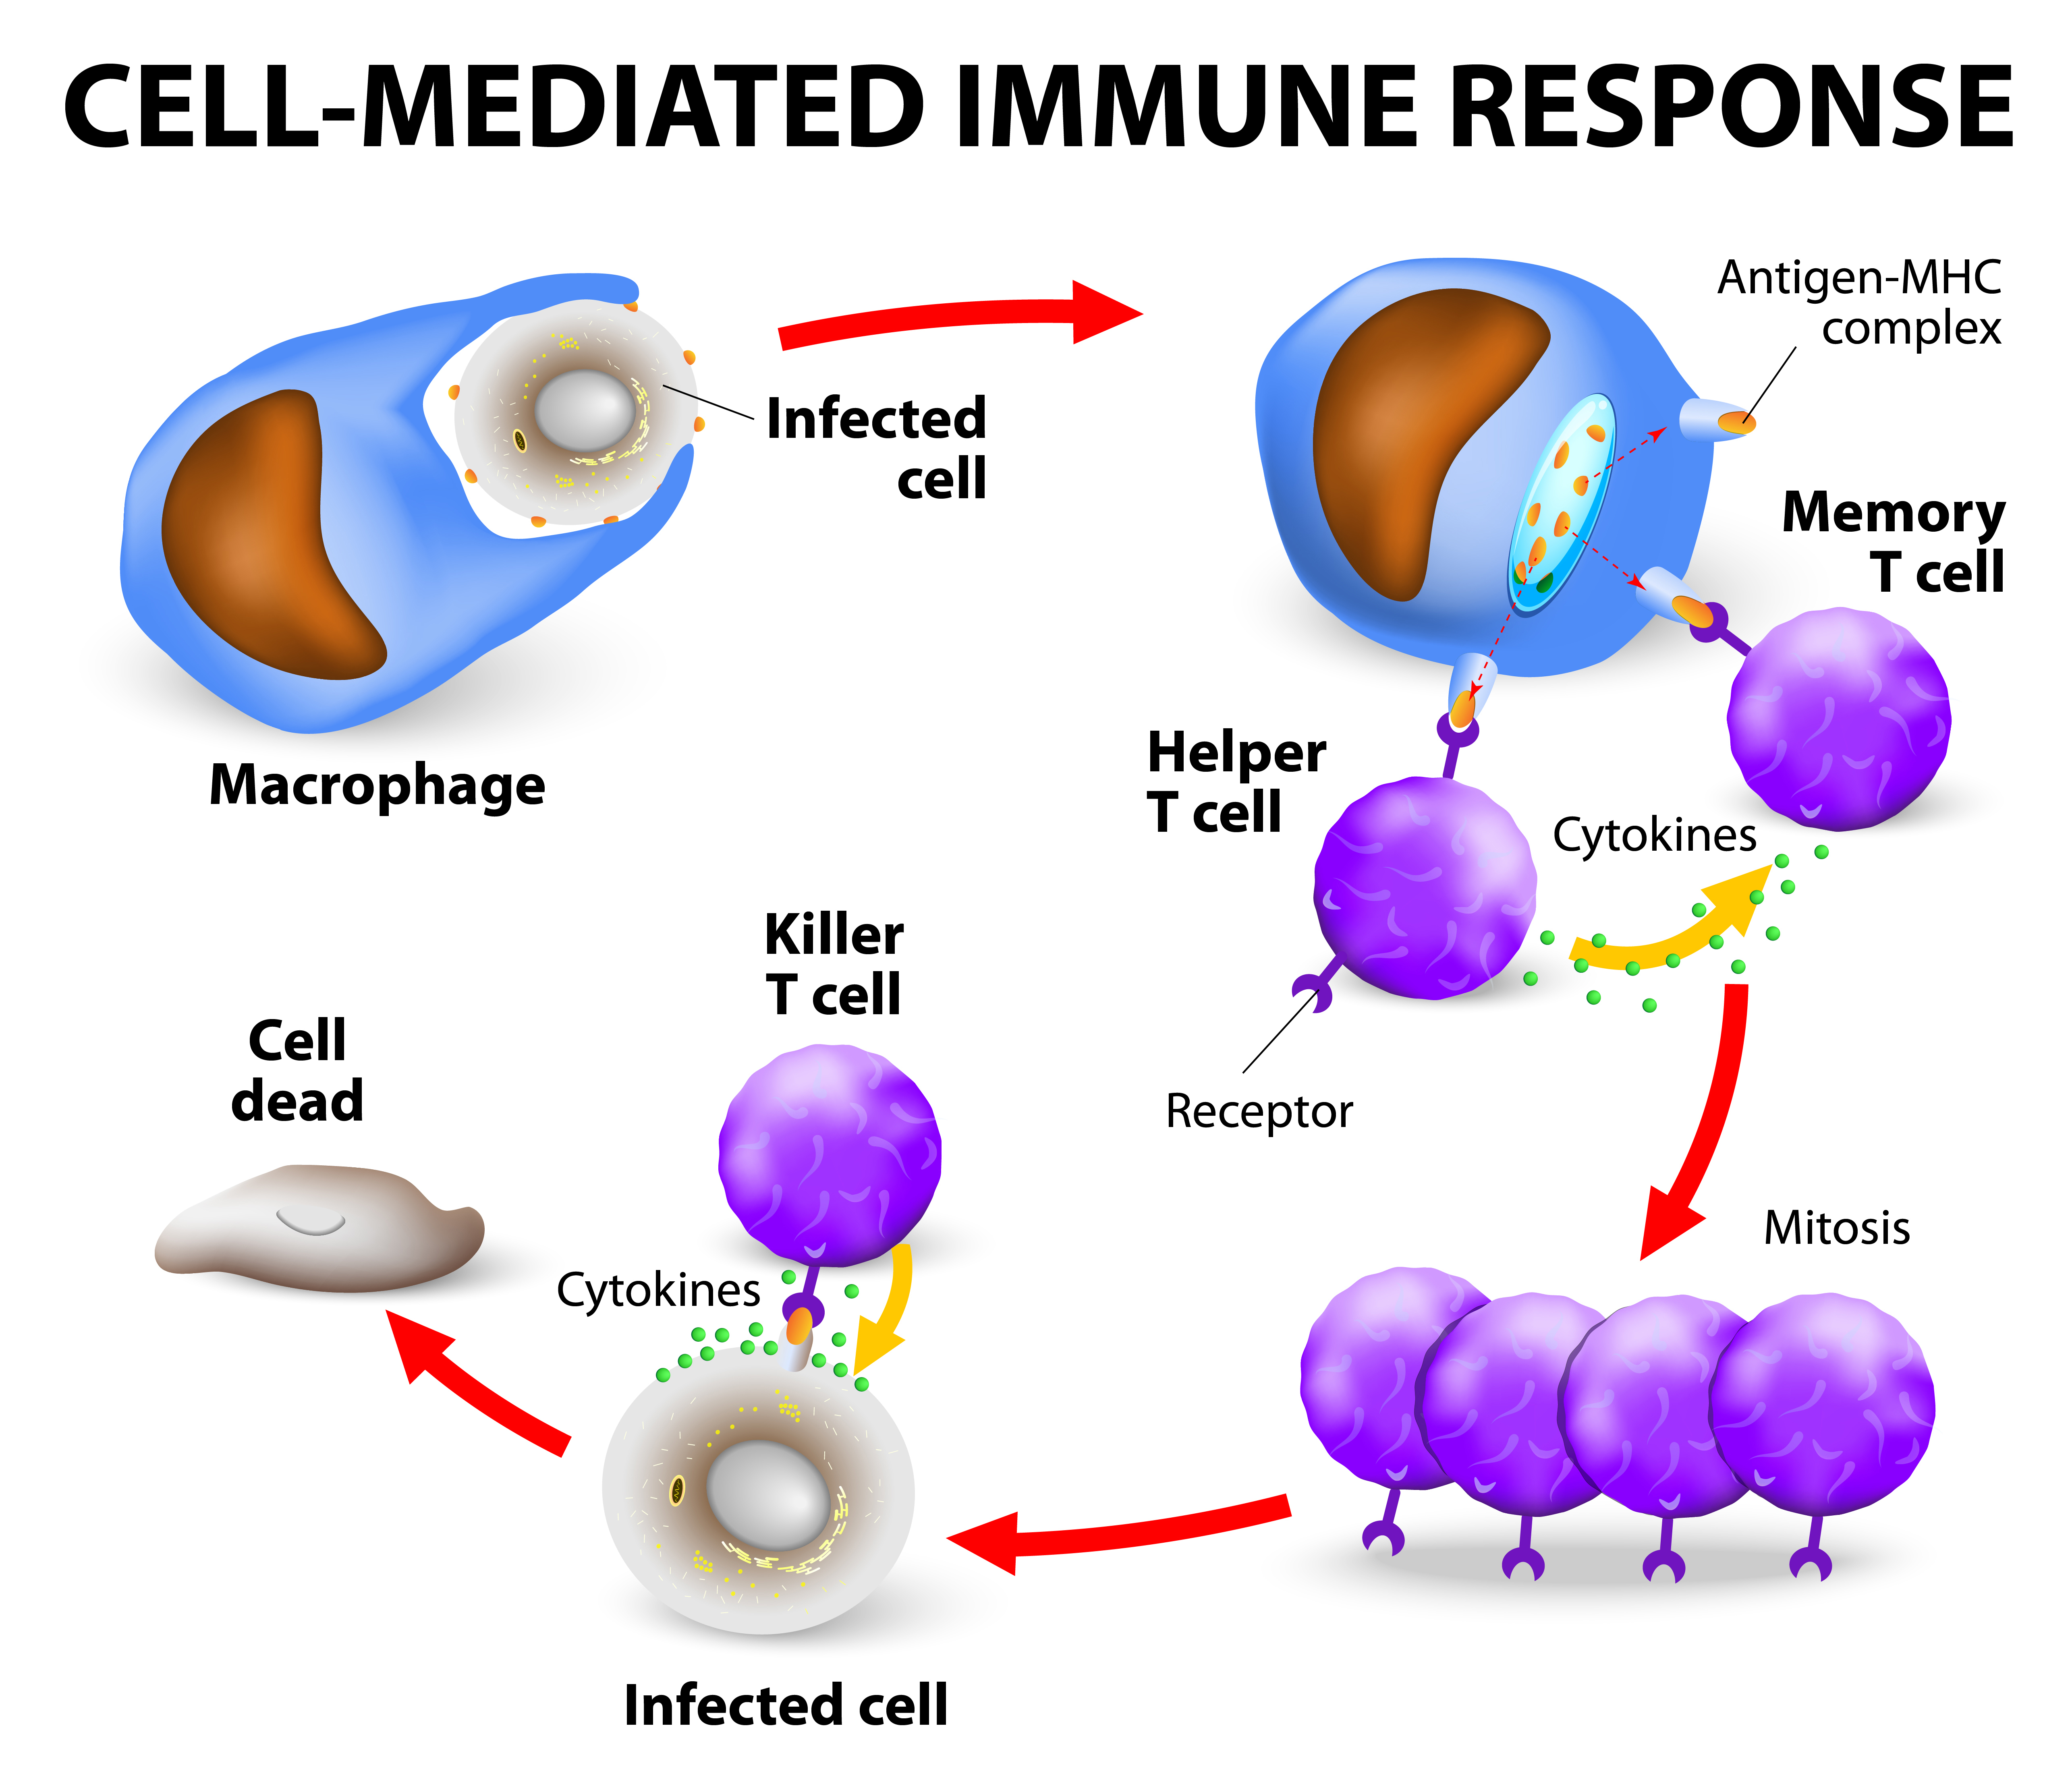 Cellular immunity